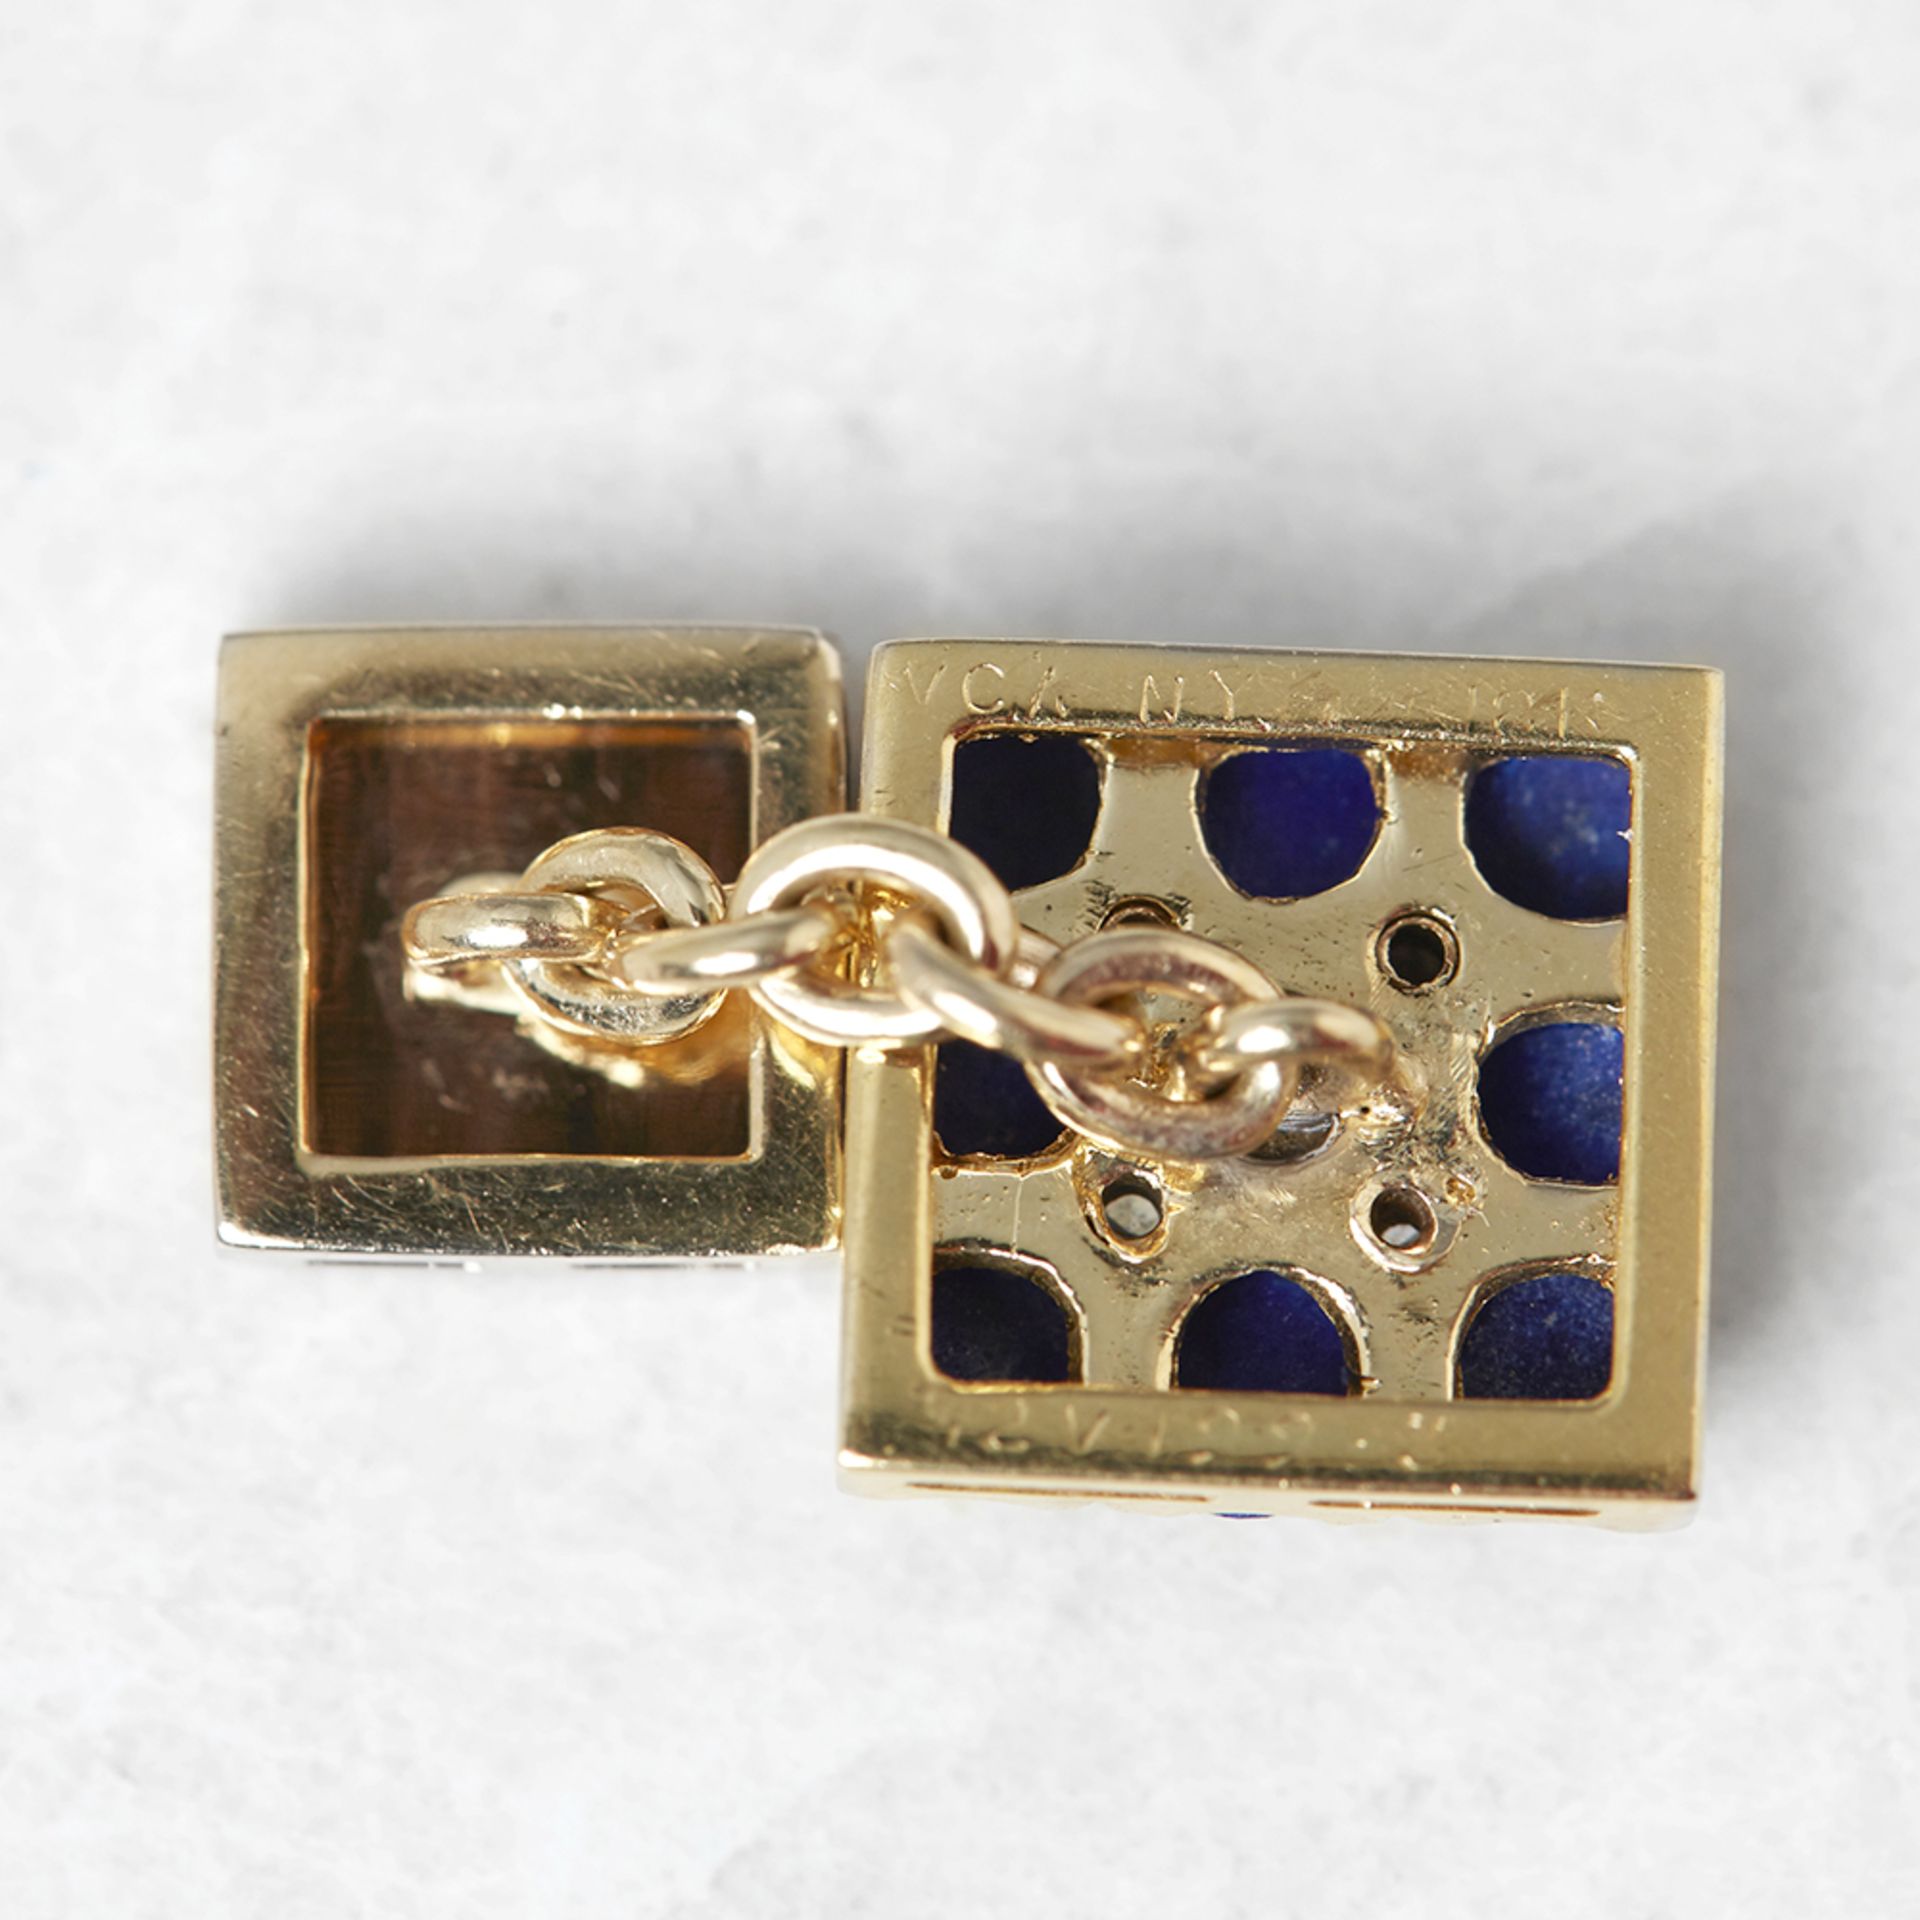 Van Cleef & Arpels 18k Yellow Gold Lapis Lazuli & 0.20ct Diamond Cufflinks - Image 5 of 5